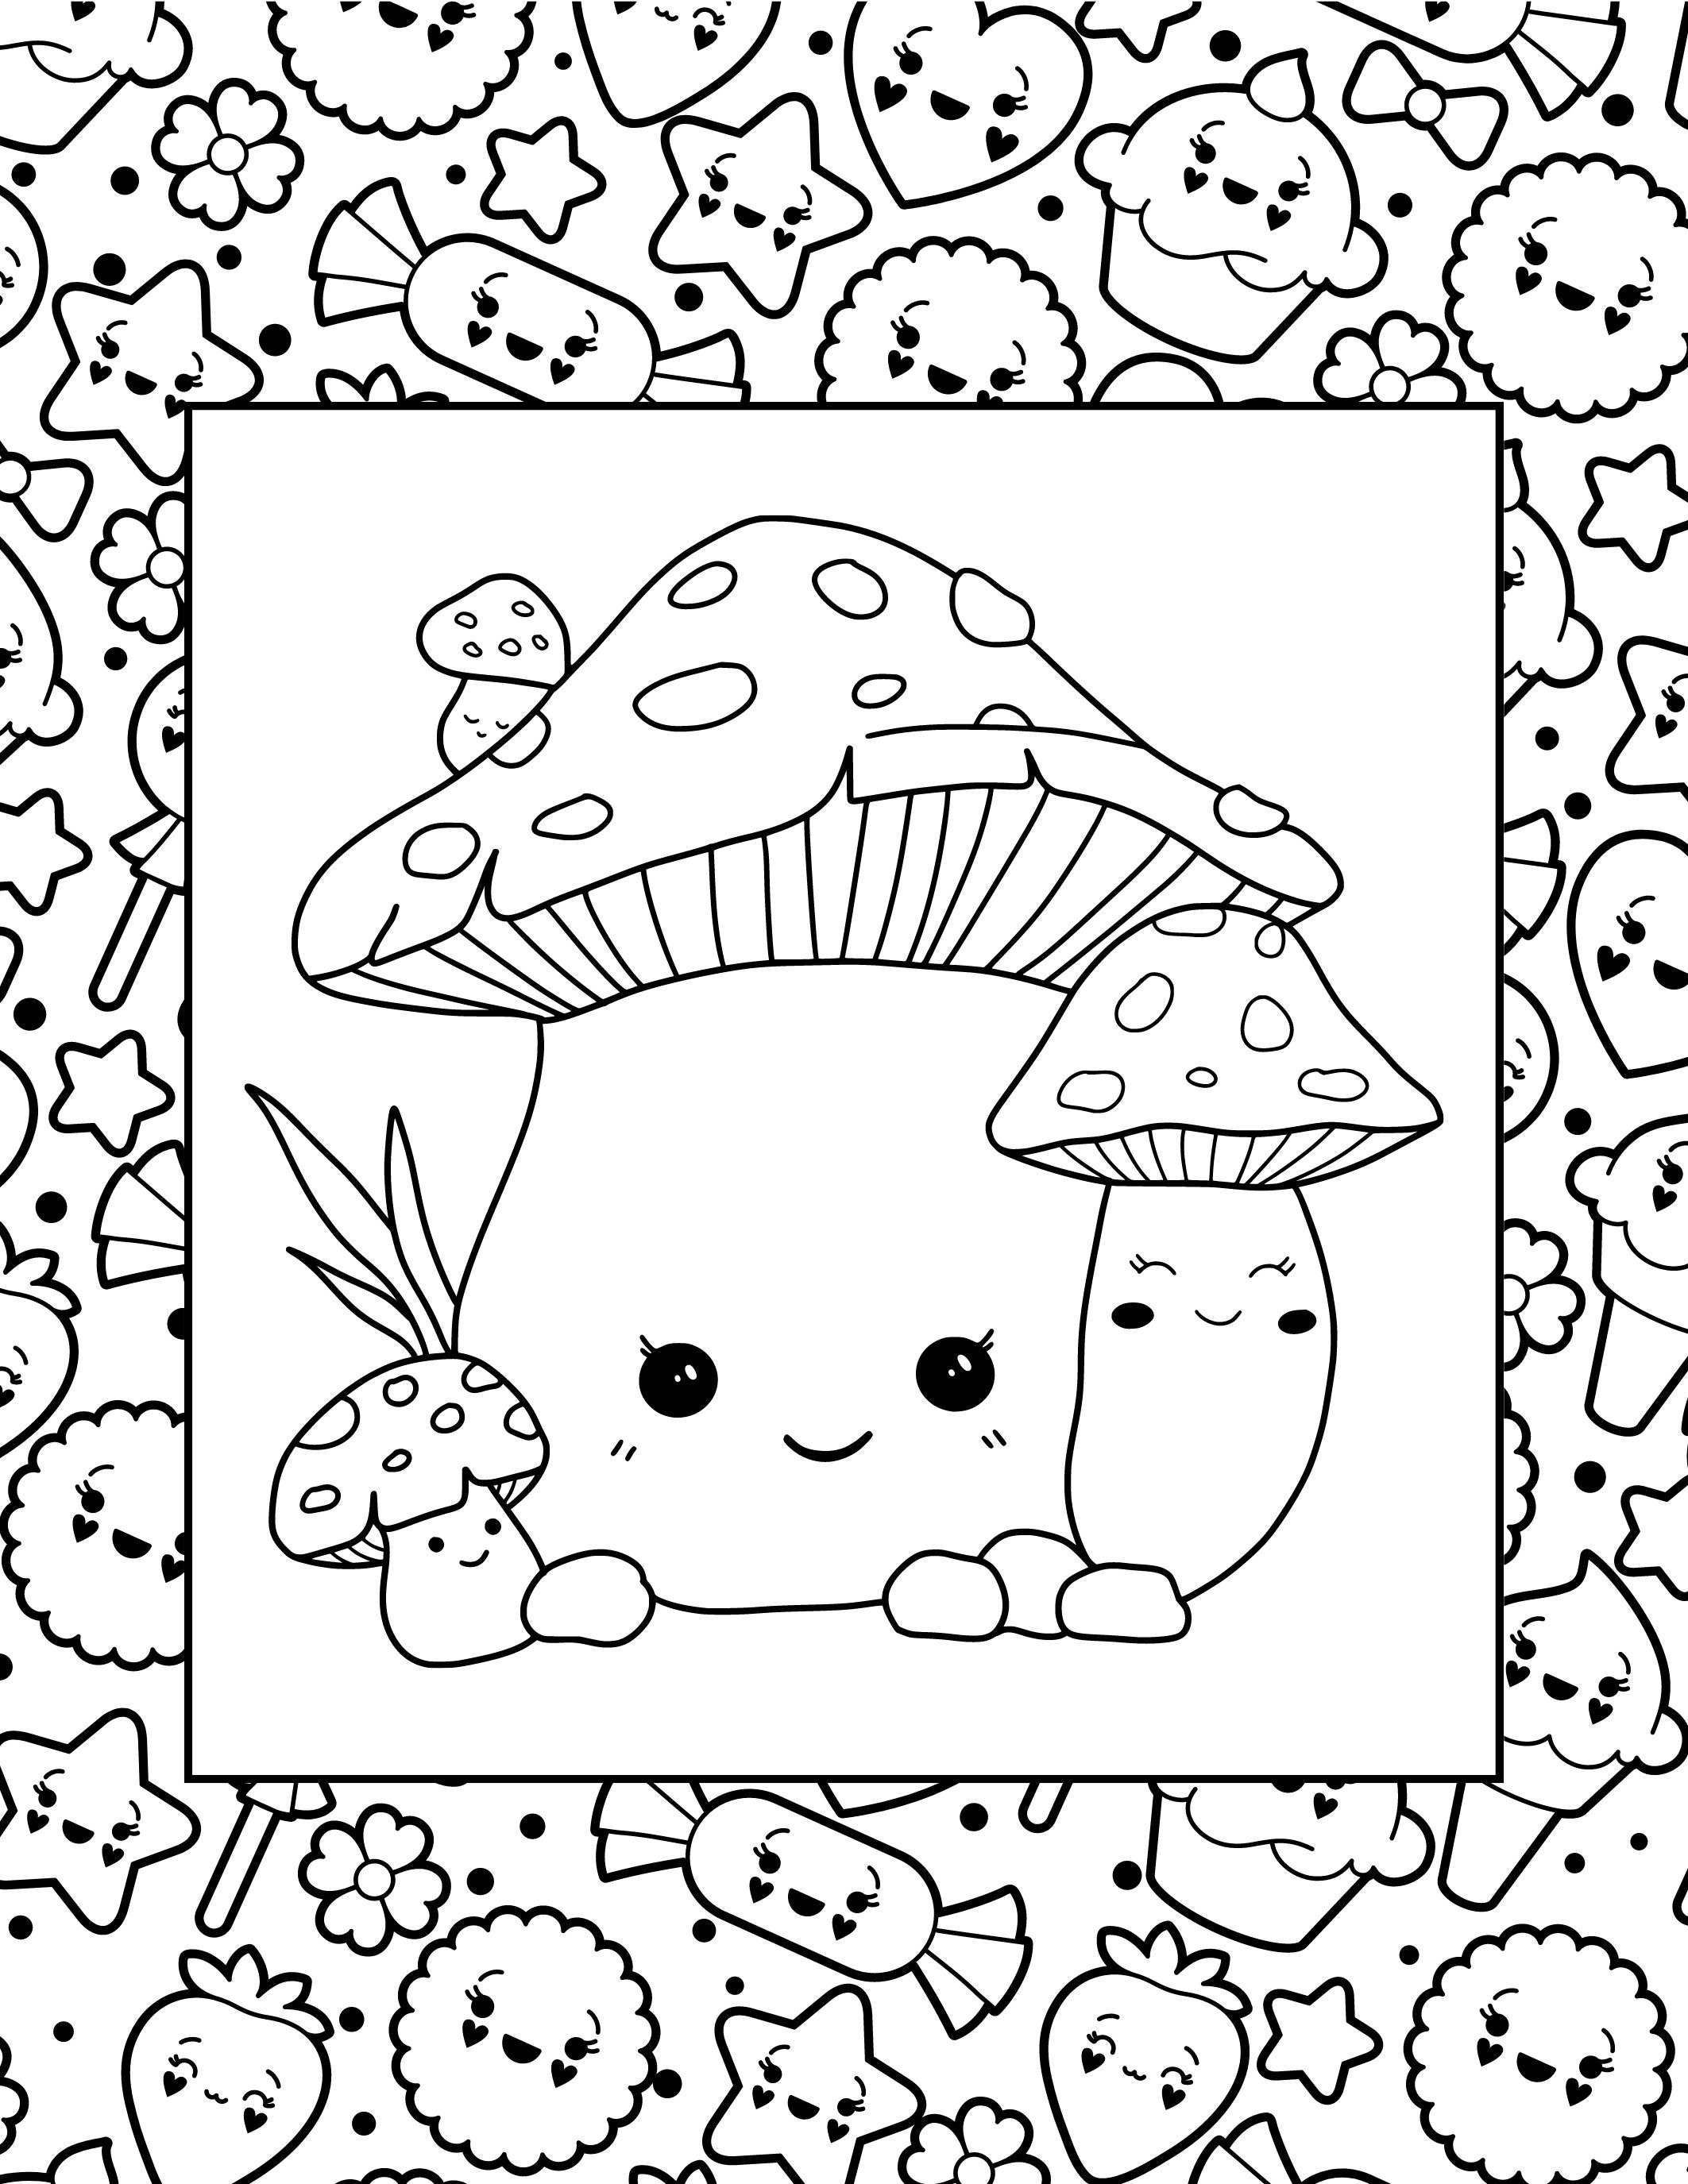 Kawaii Mushroom Printable Coloring Pages Instant Download - Etsy